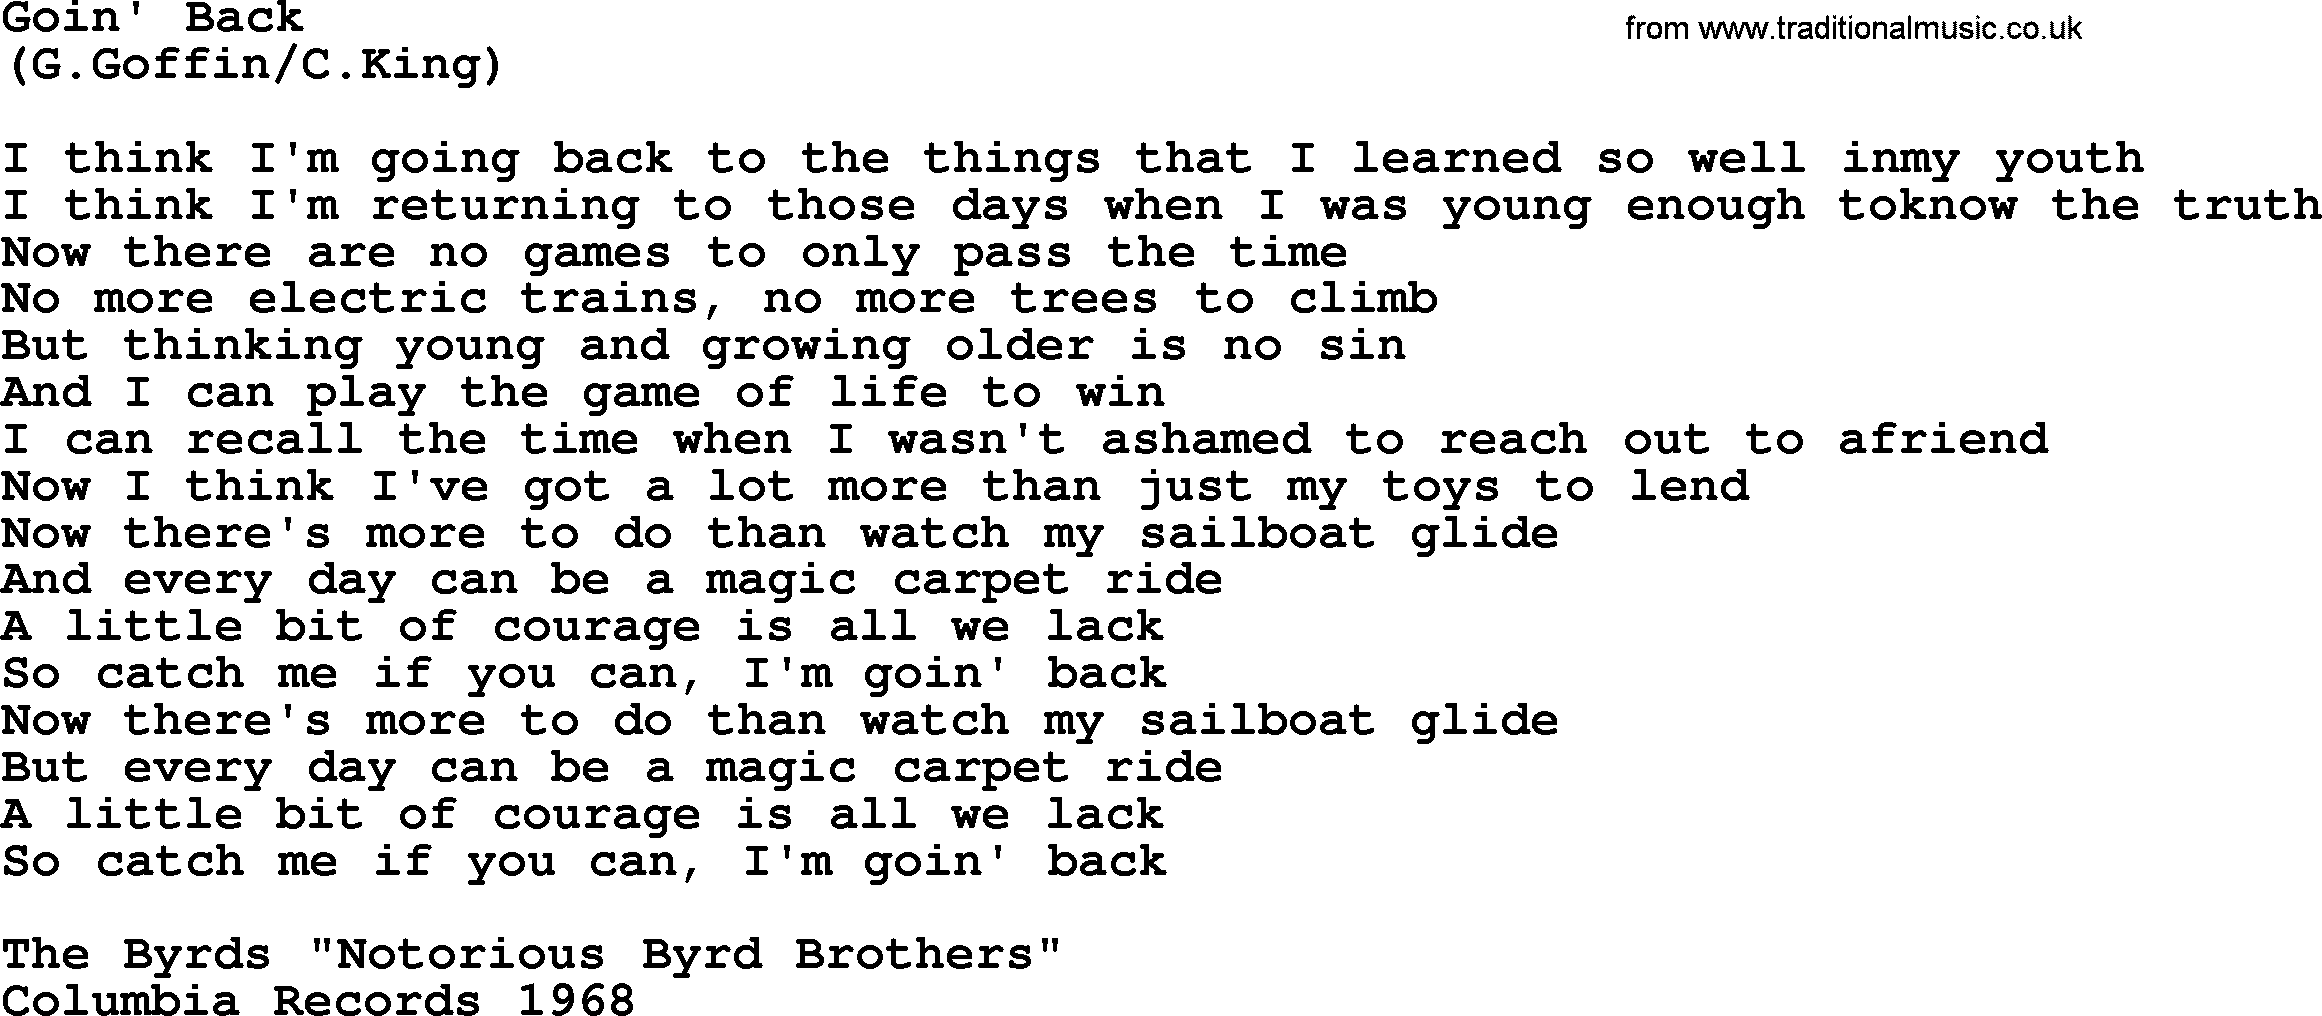 The Byrds song Goin' Back, lyrics